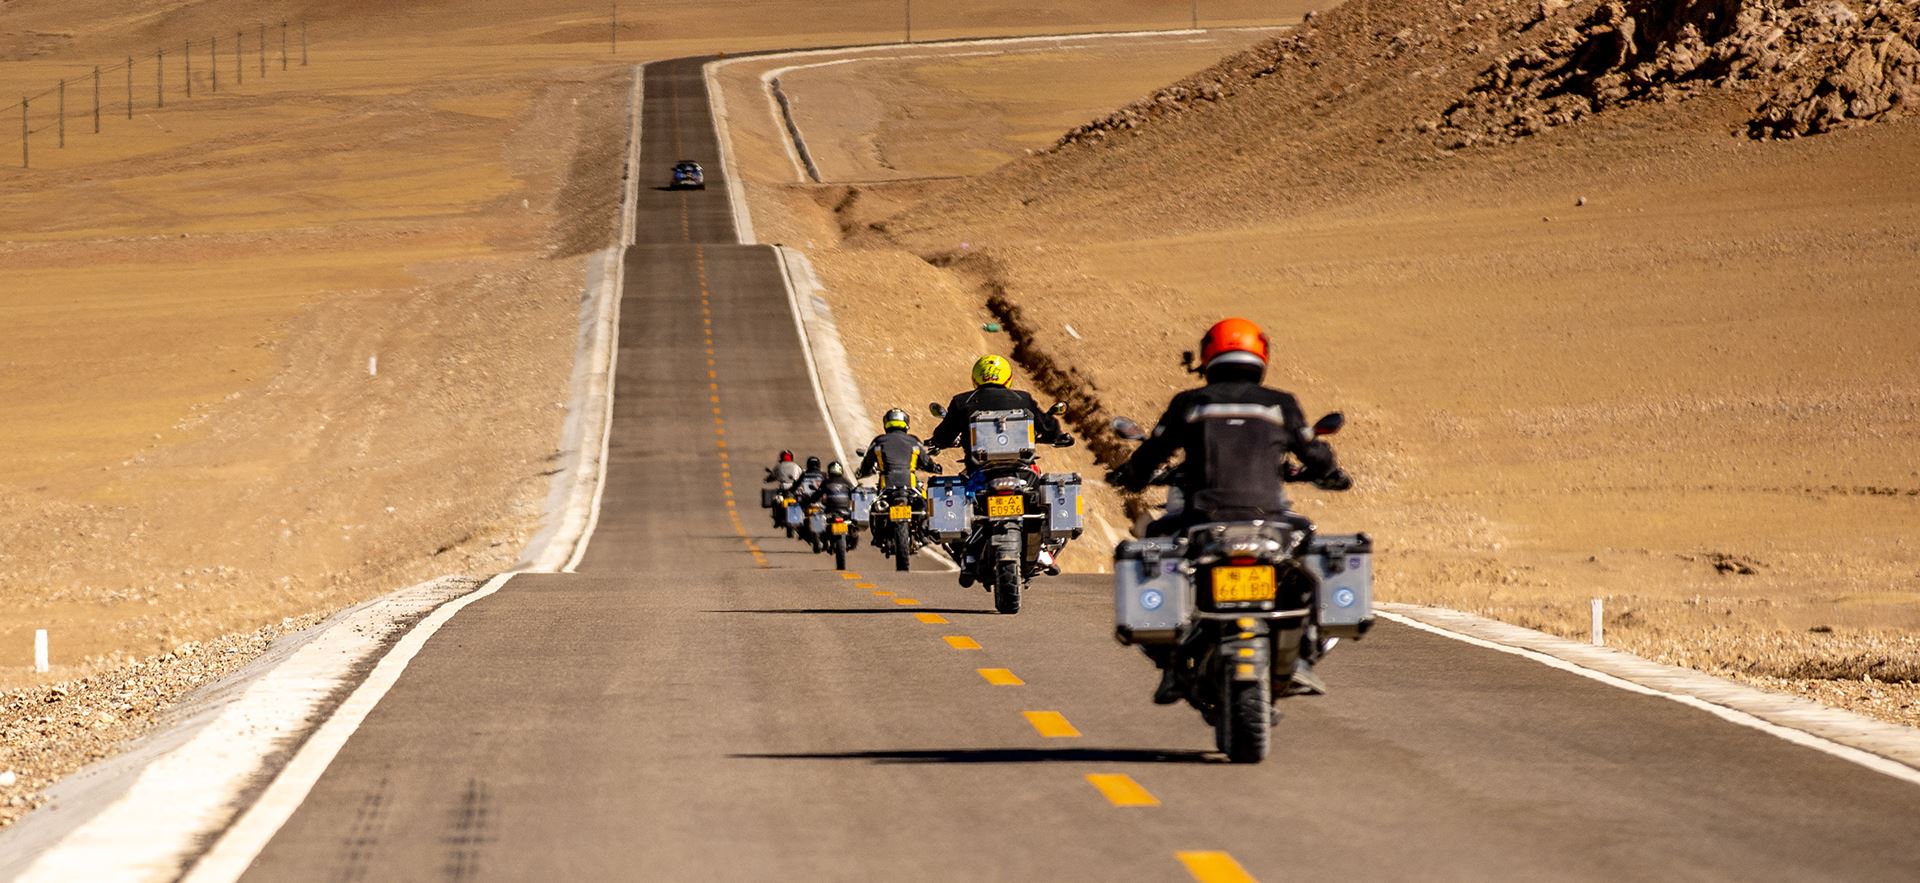 Rental Motorbike Tour from Lhasa via Everest to Kathmandu